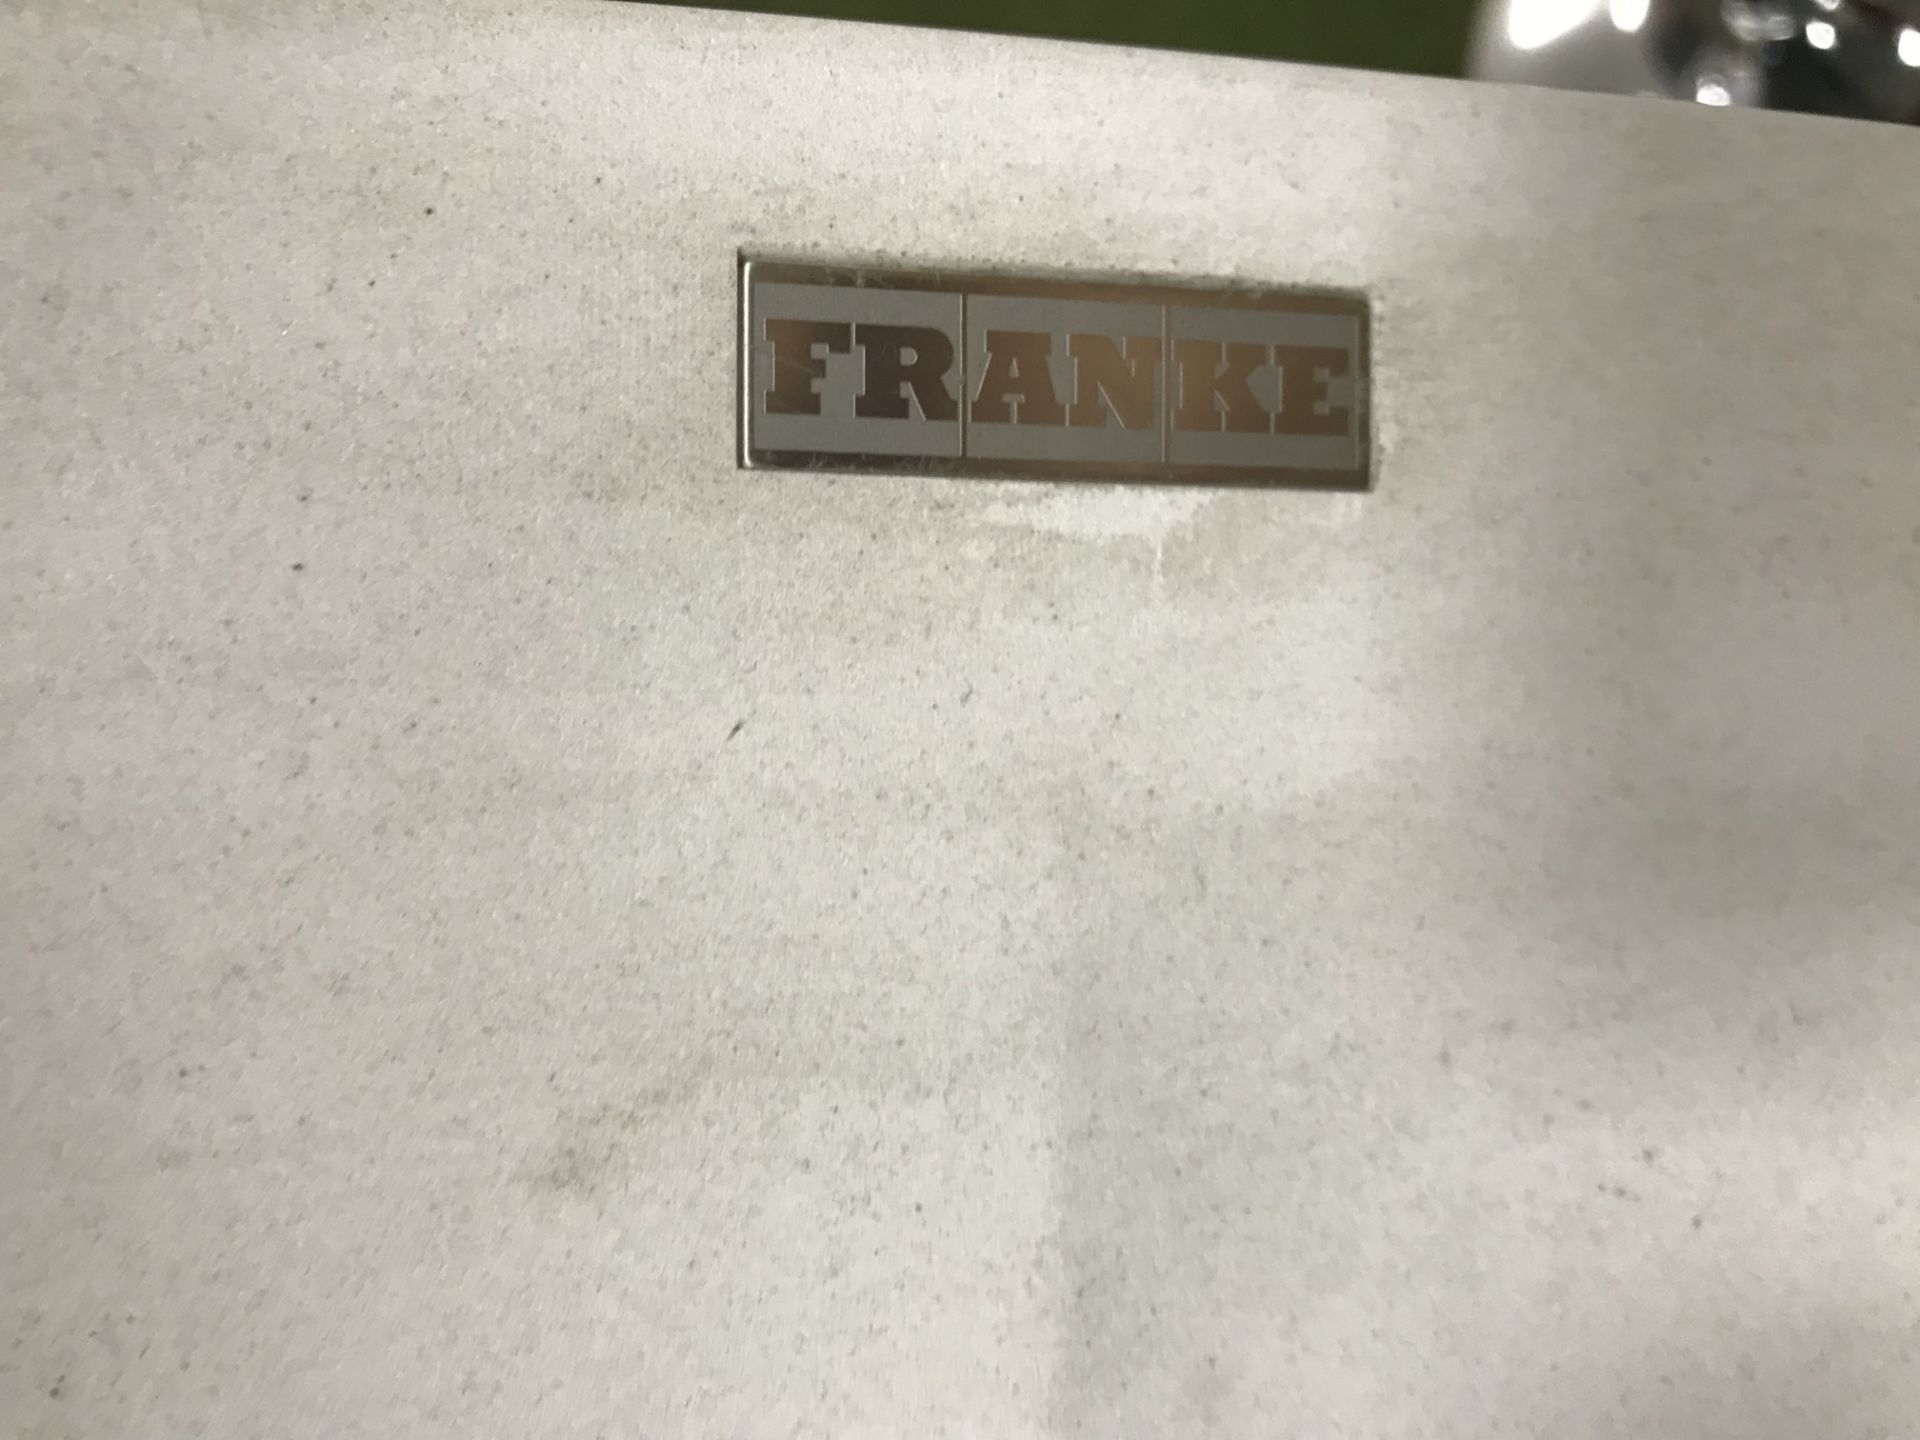 Ex Display Franke Granite 1.0 Bowl Sink with Drainer - White - Image 2 of 6